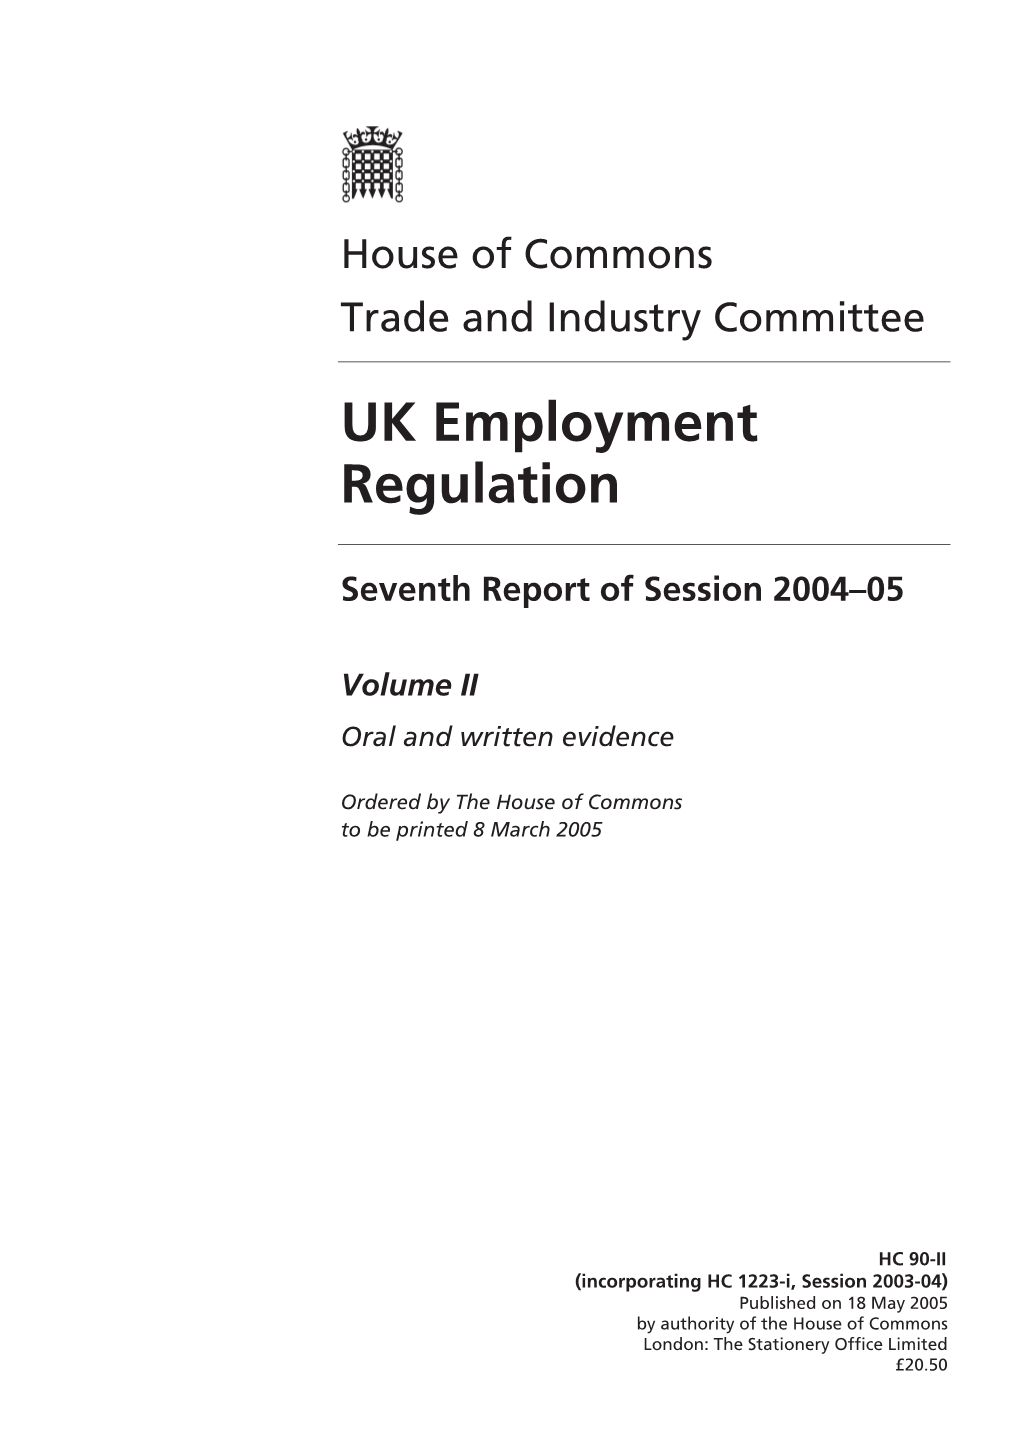 UK Employment Regulation